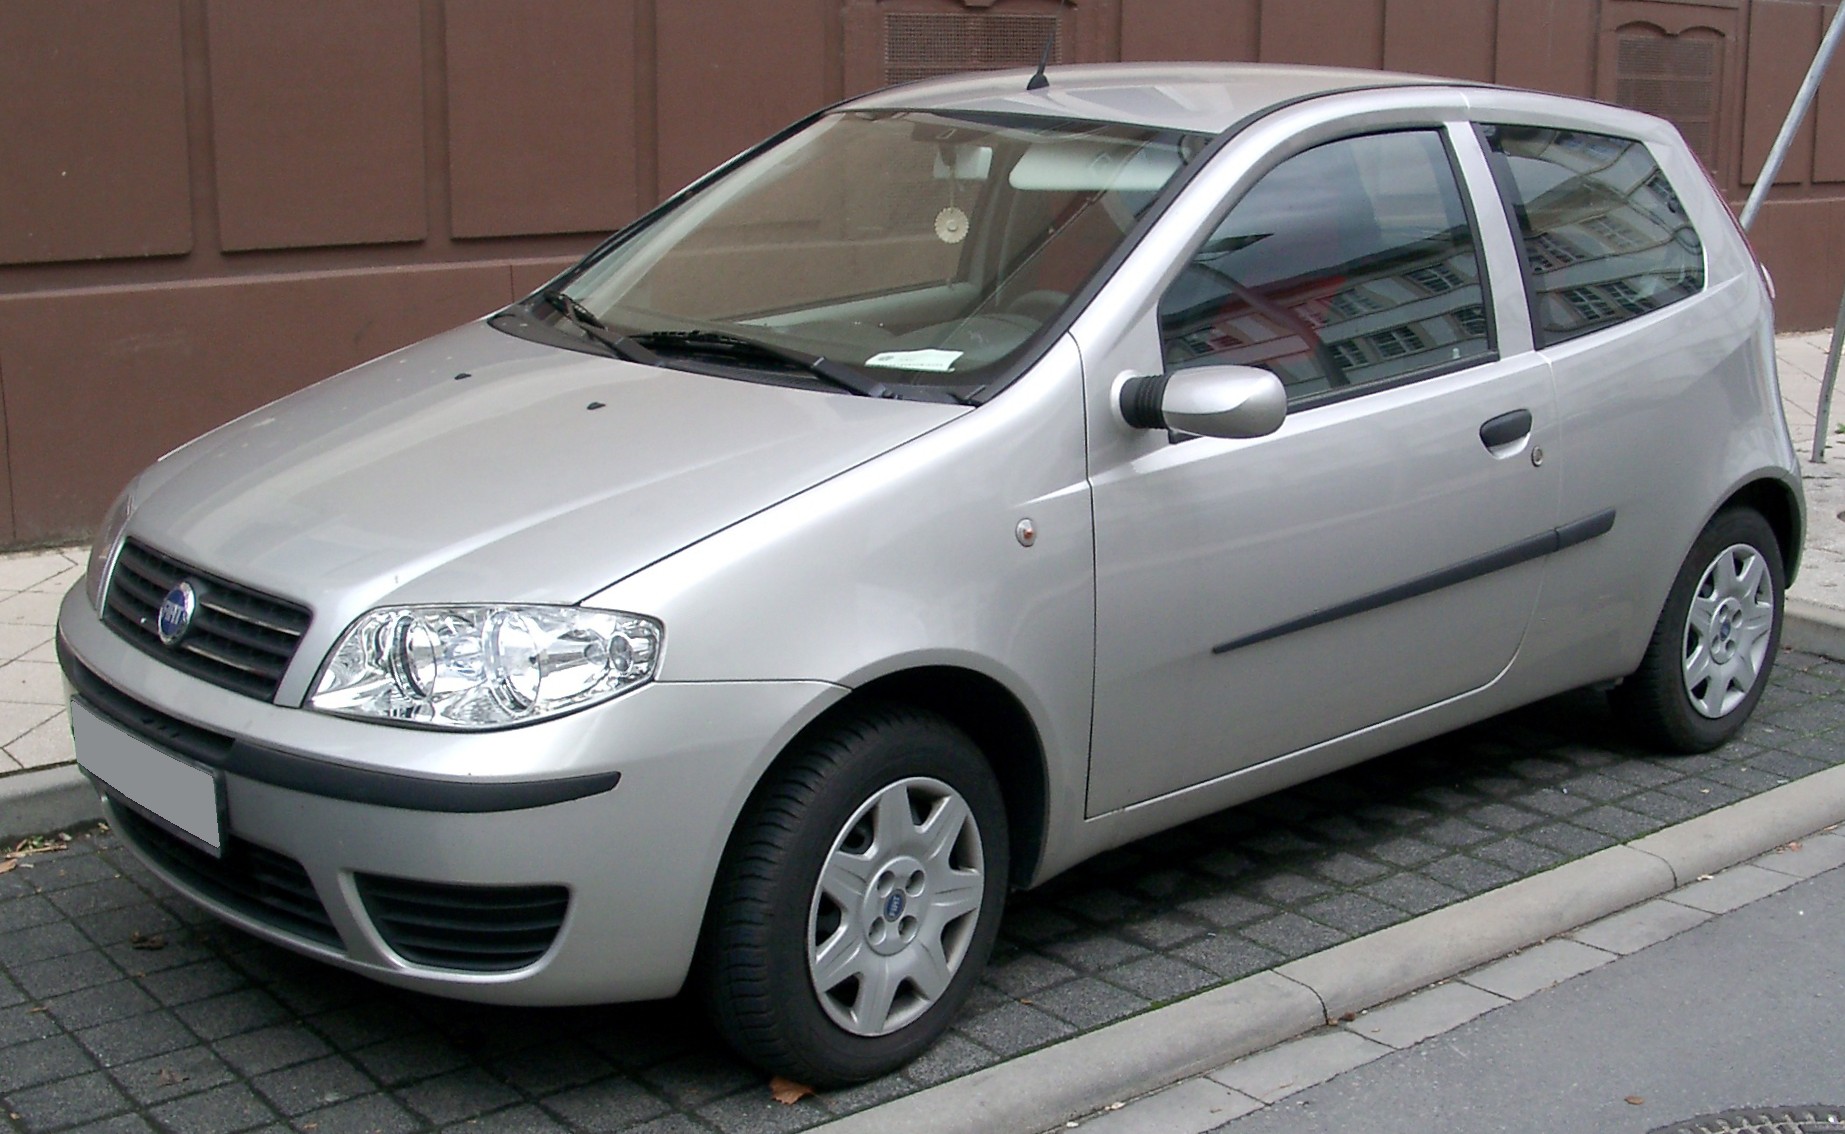 File:Fiat Punto front 20080301.jpg - Wikimedia Commons